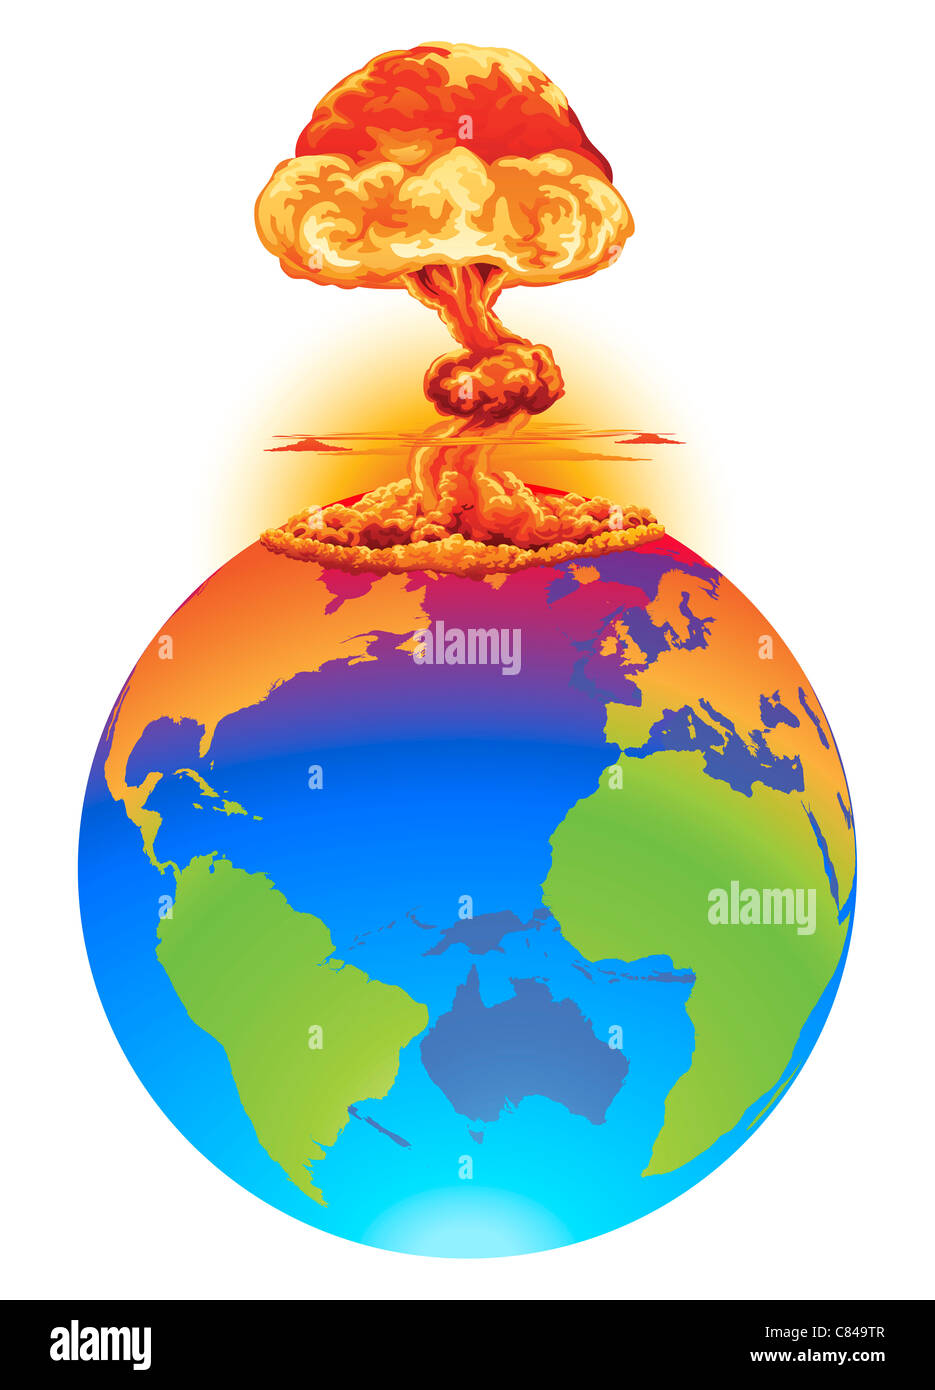 Ein Atompilz Explosion auf der Weltkugel. Globale Katastrophe Konzept, Katastrophe, Ende der Welt usw.. Stockfoto